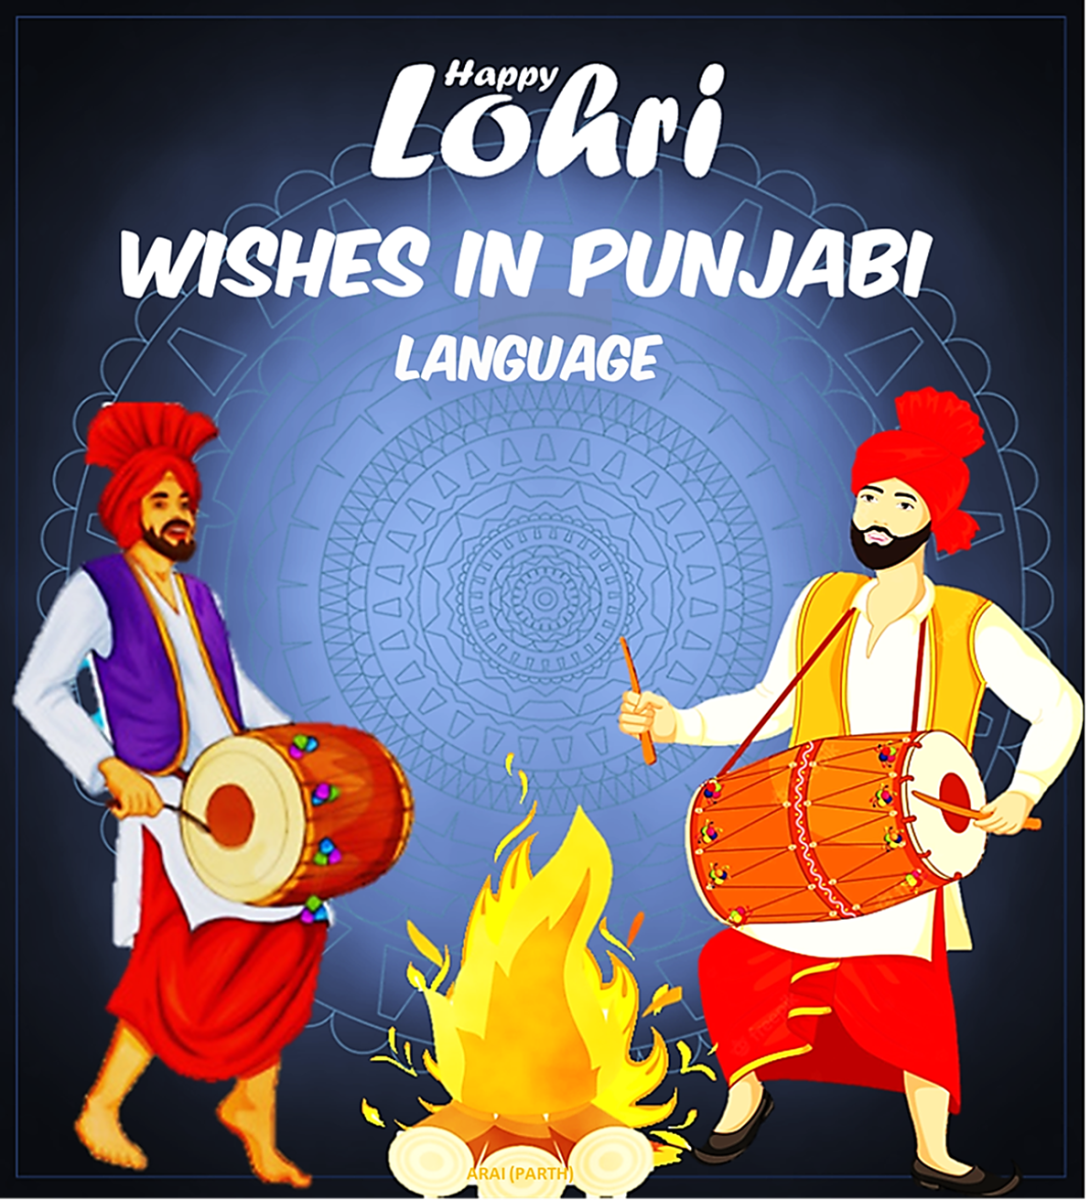 Happy Lohri Wishes and Greetings in Punjabi Language